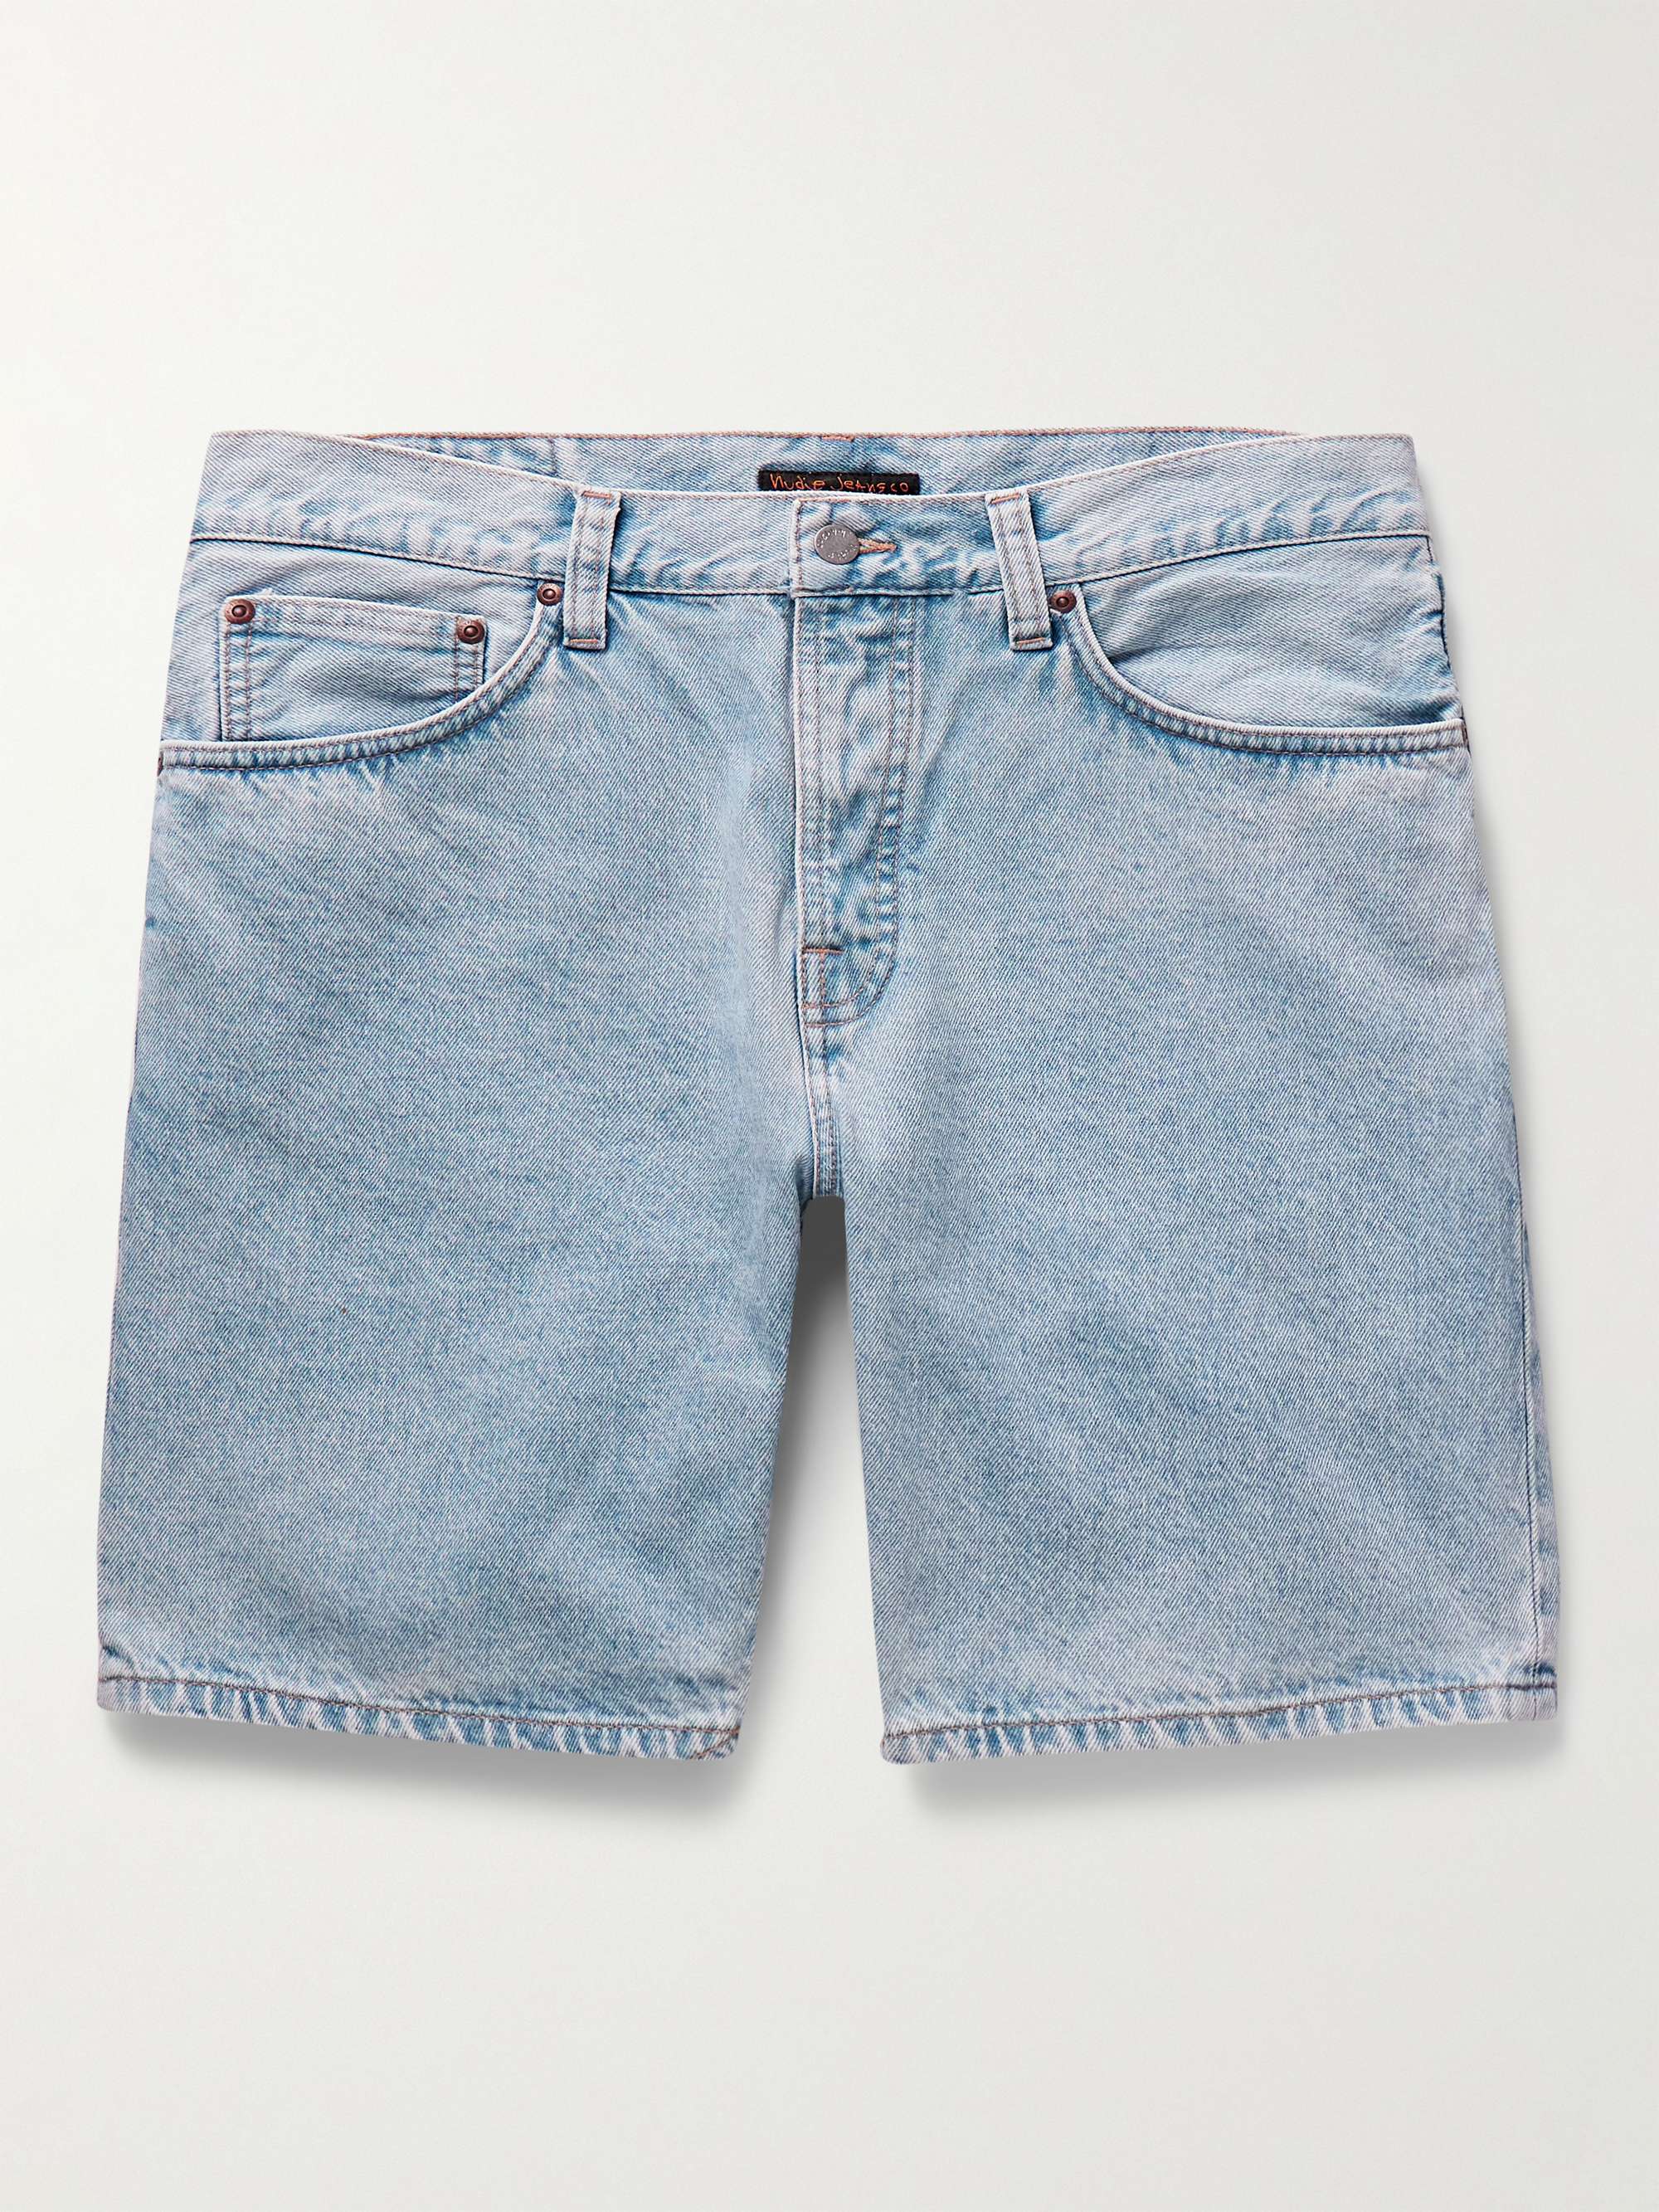 Nudie Jeans Men's Seth Straight-Leg Denim Shorts